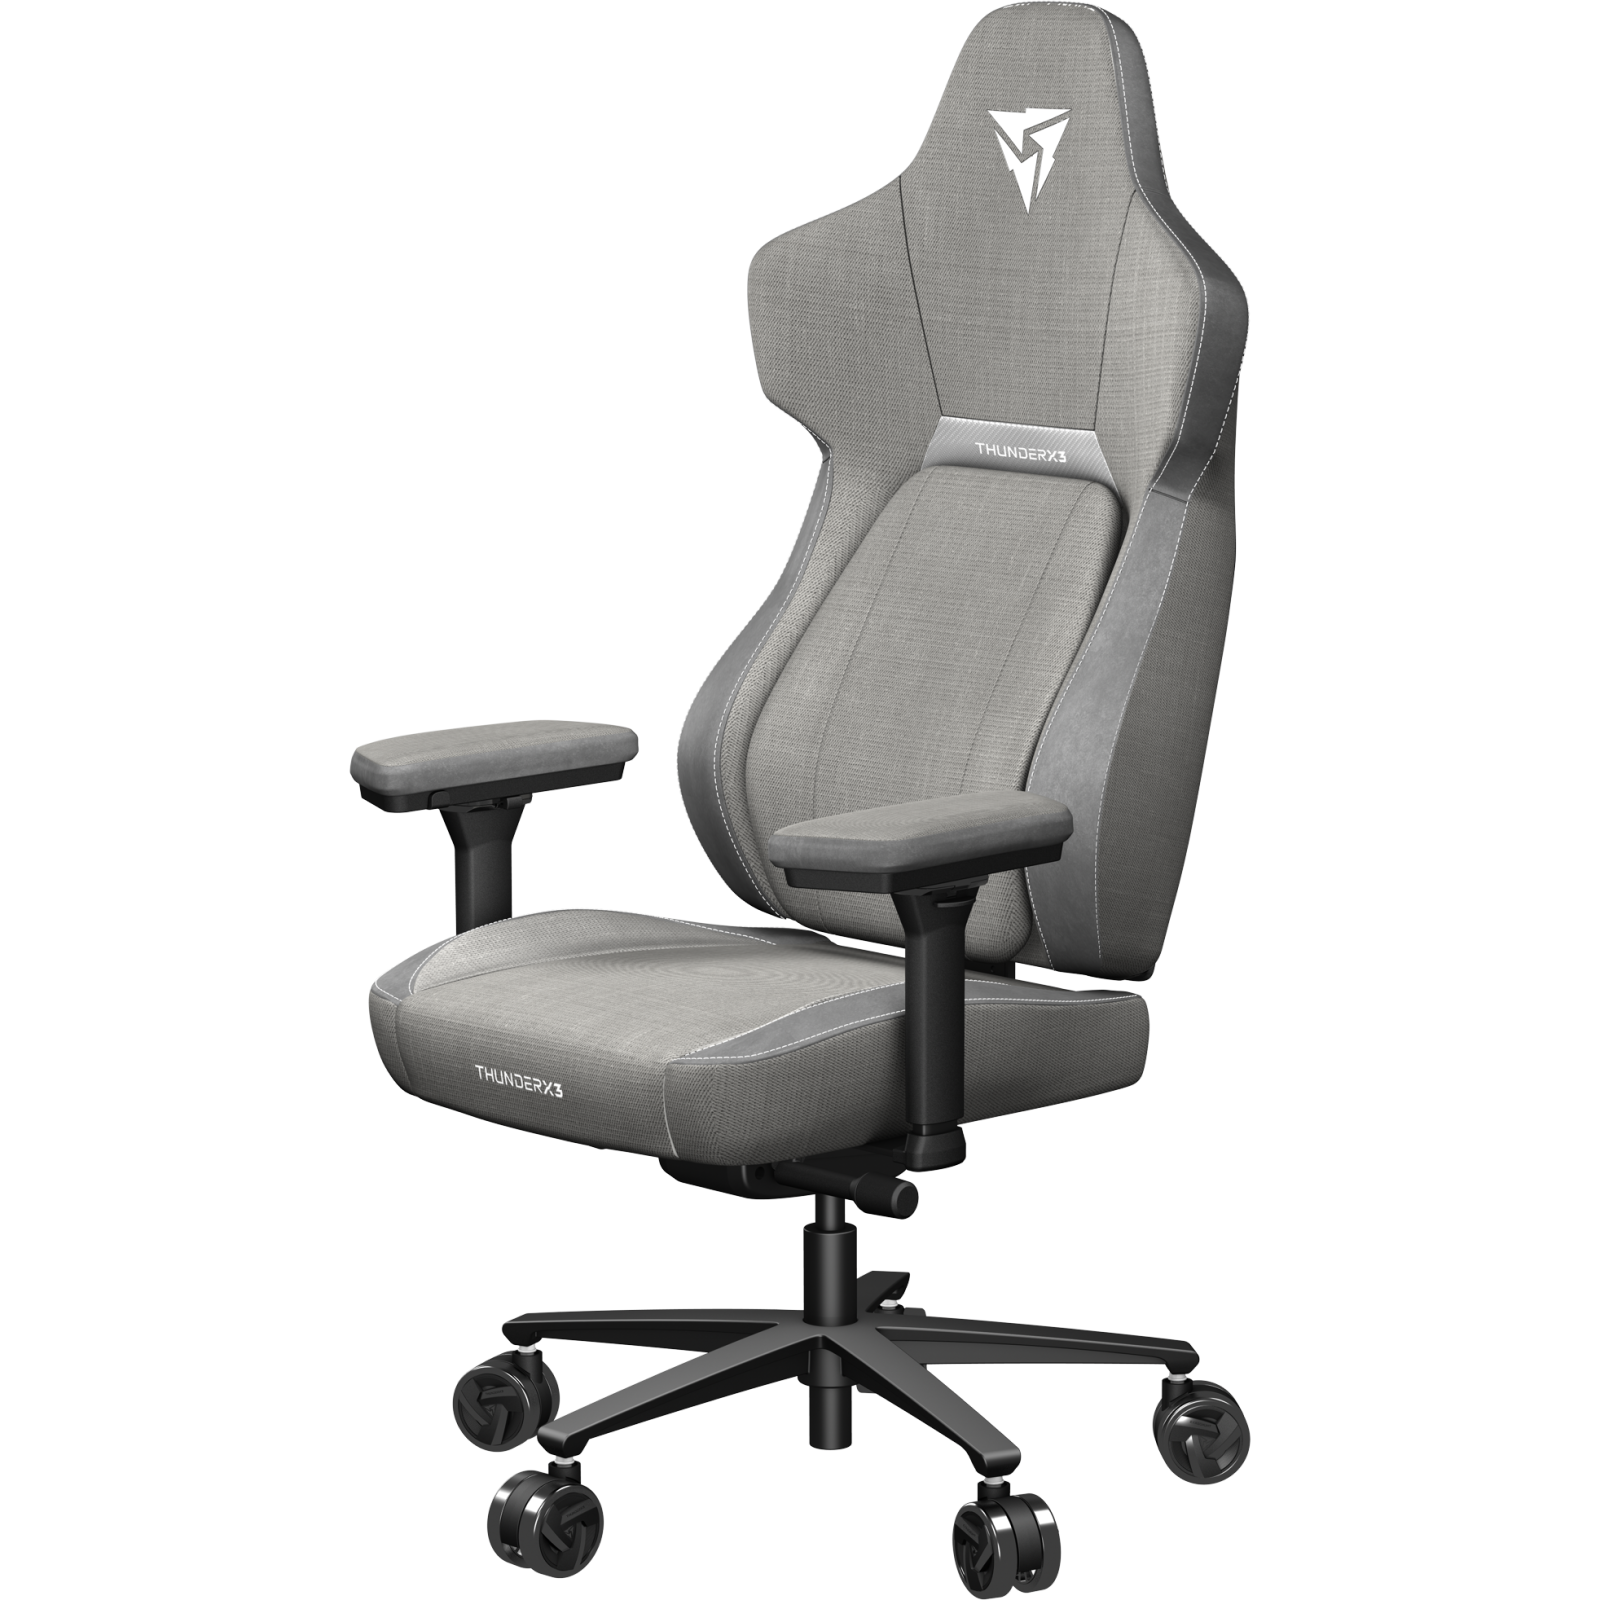 ThunderX3 CORE Loft Gaming Chair Grey